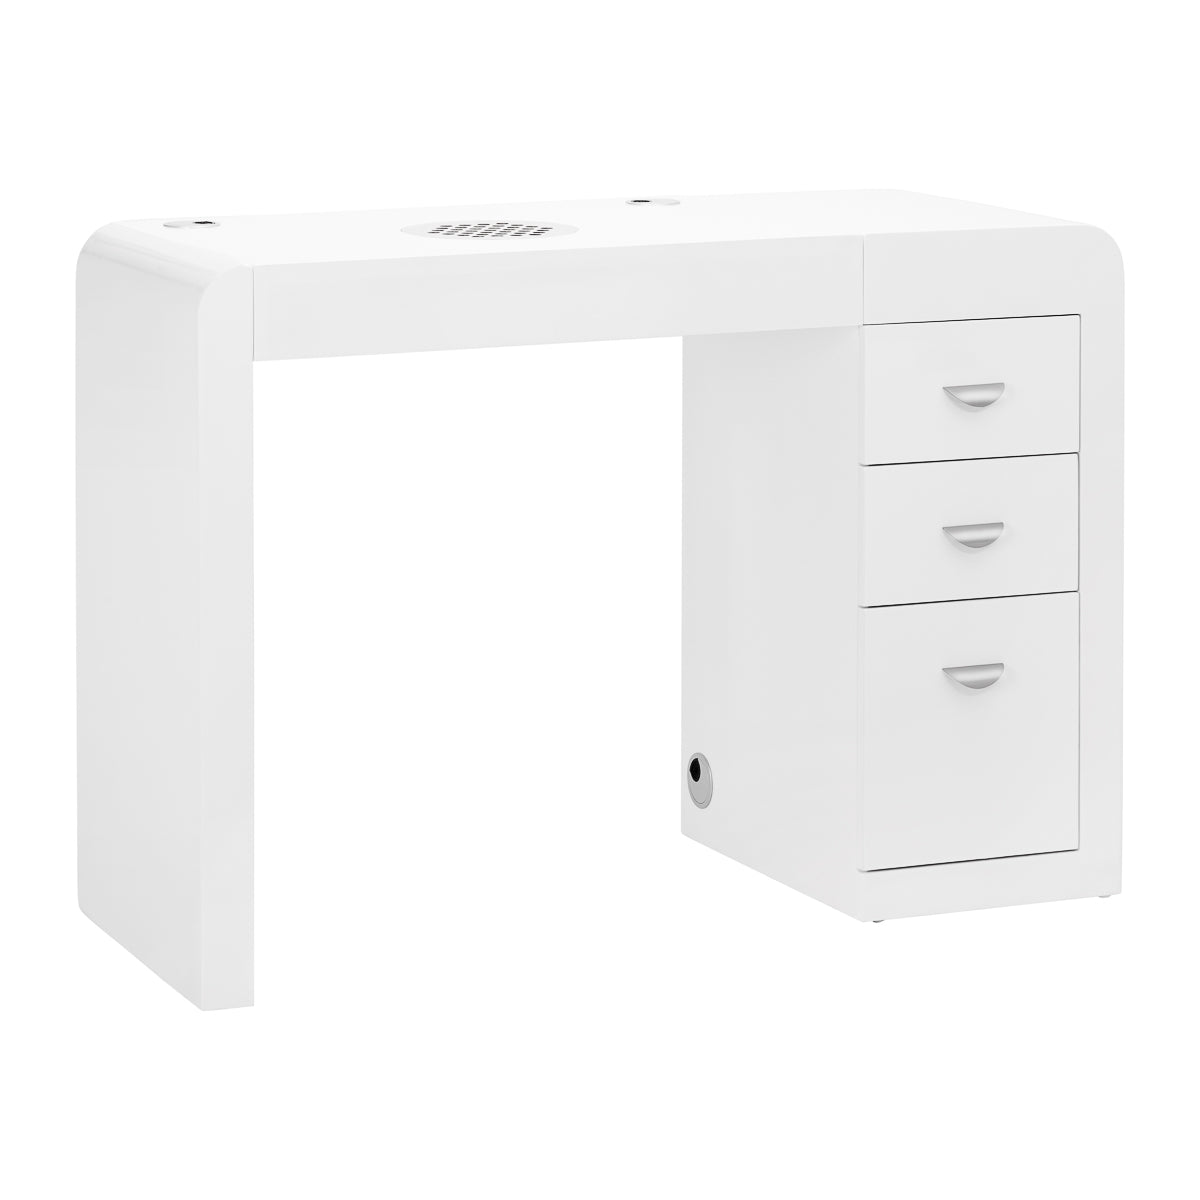 ActvieShop Manicure Desk 312 White Left